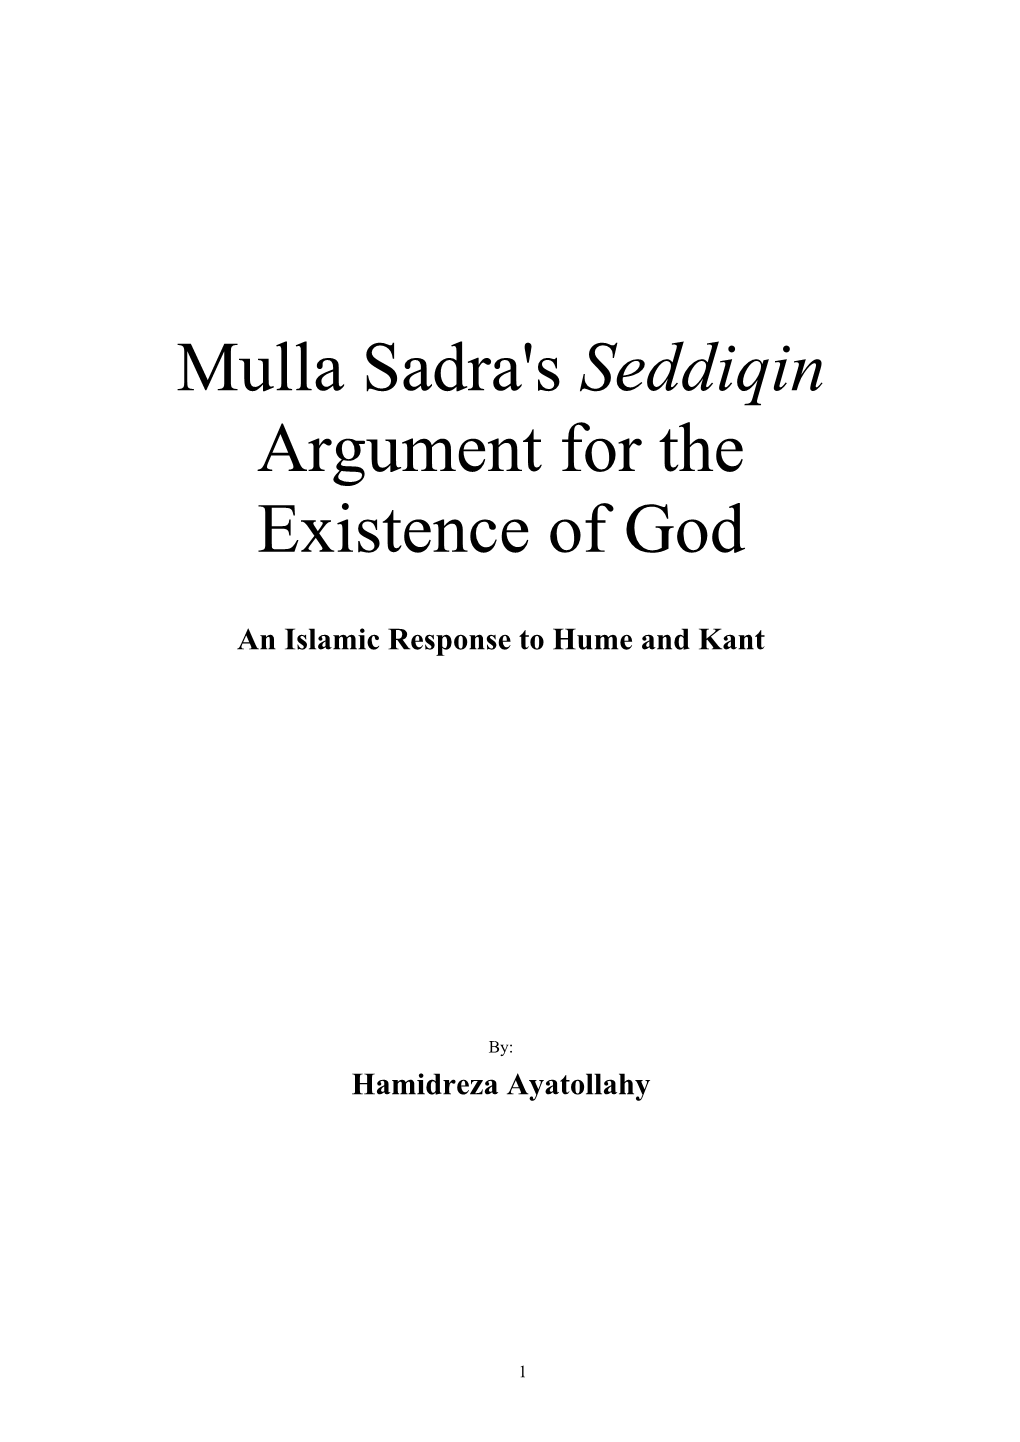 Mulla Sadra's Seddiqin Argument for the Existence of God